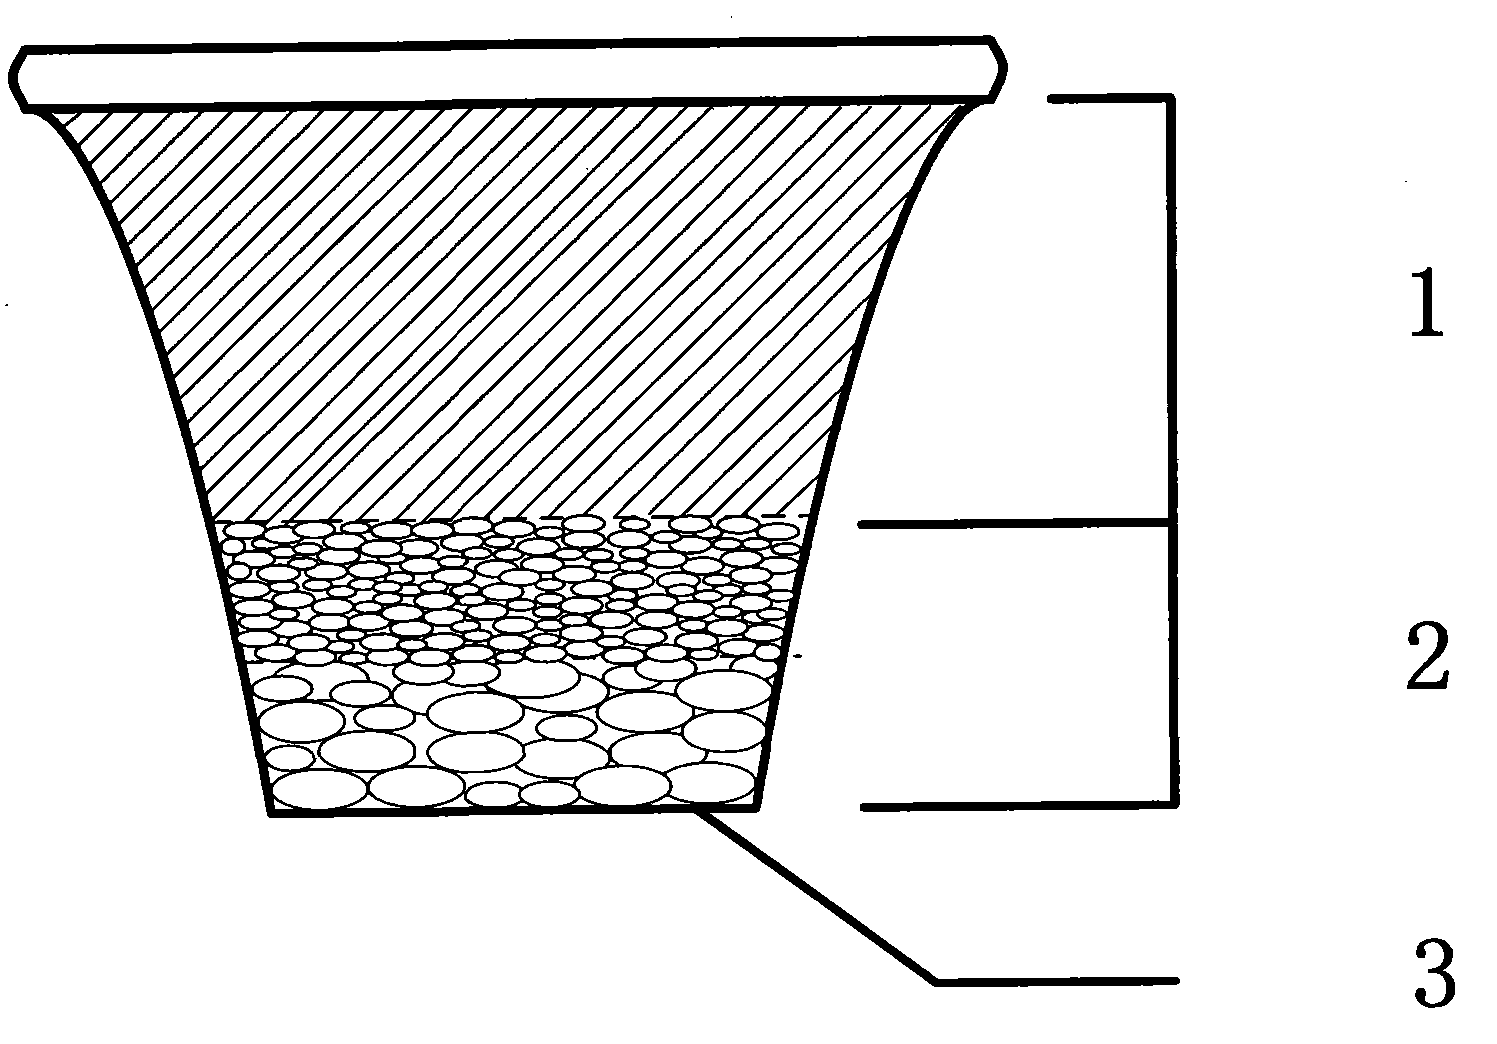 Method of using lake sediment and coal slag as compost